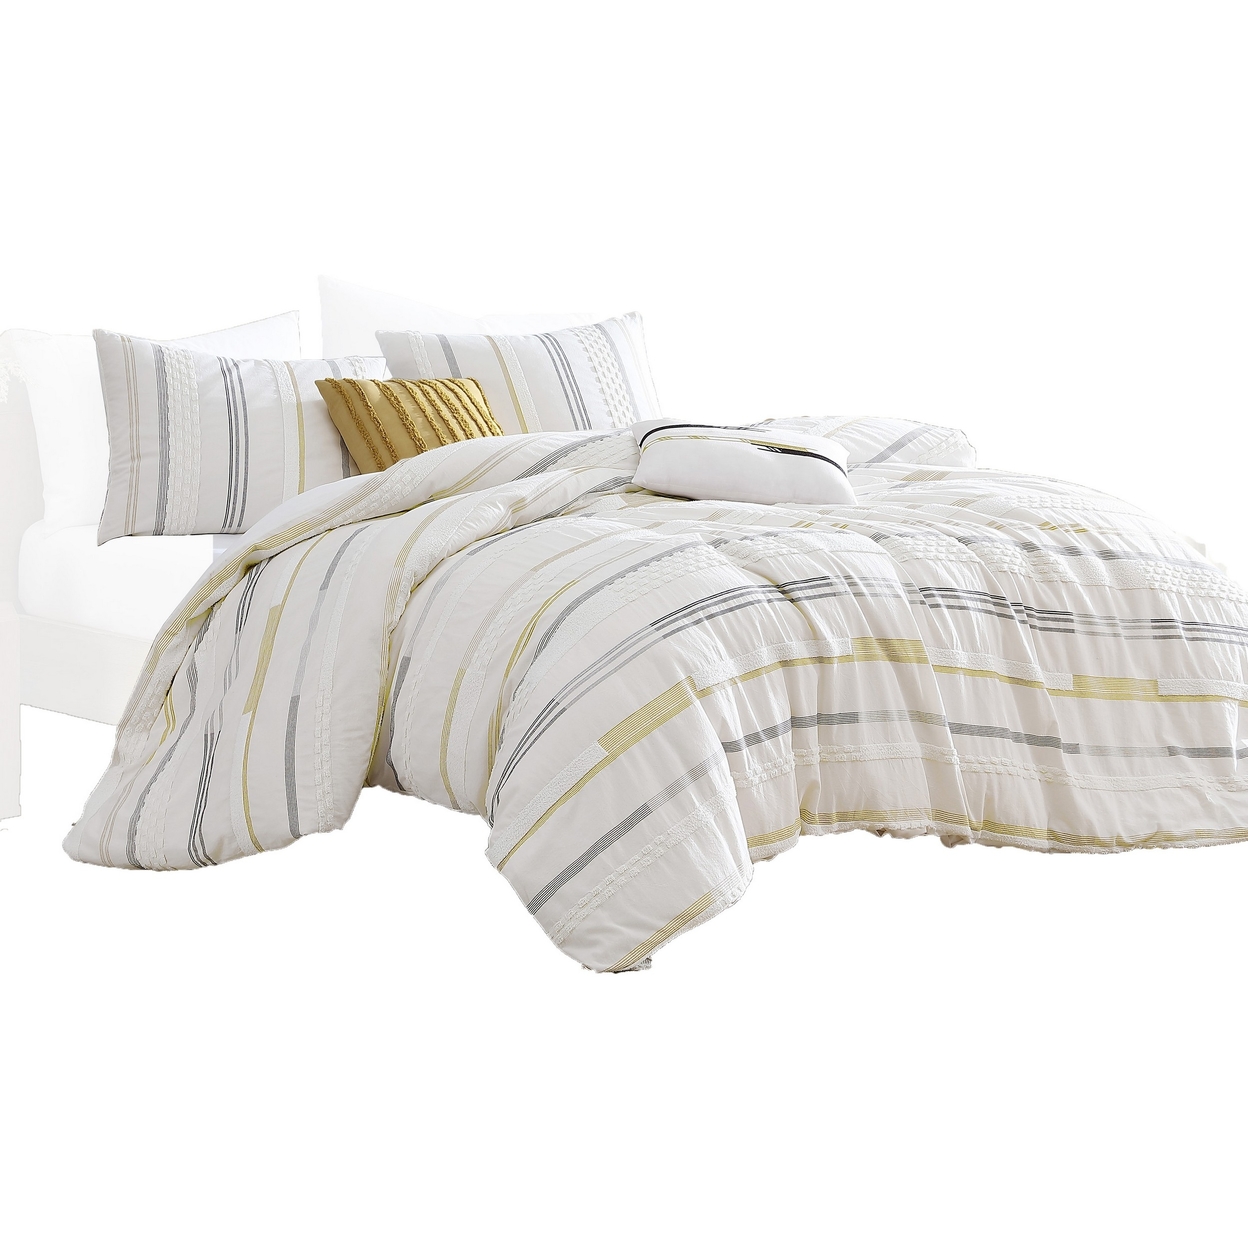 Mary 6 Piece King Duvet Comforter Set, 2 Pillows, Textured Ivory Boucle - Saltoro Sherpi